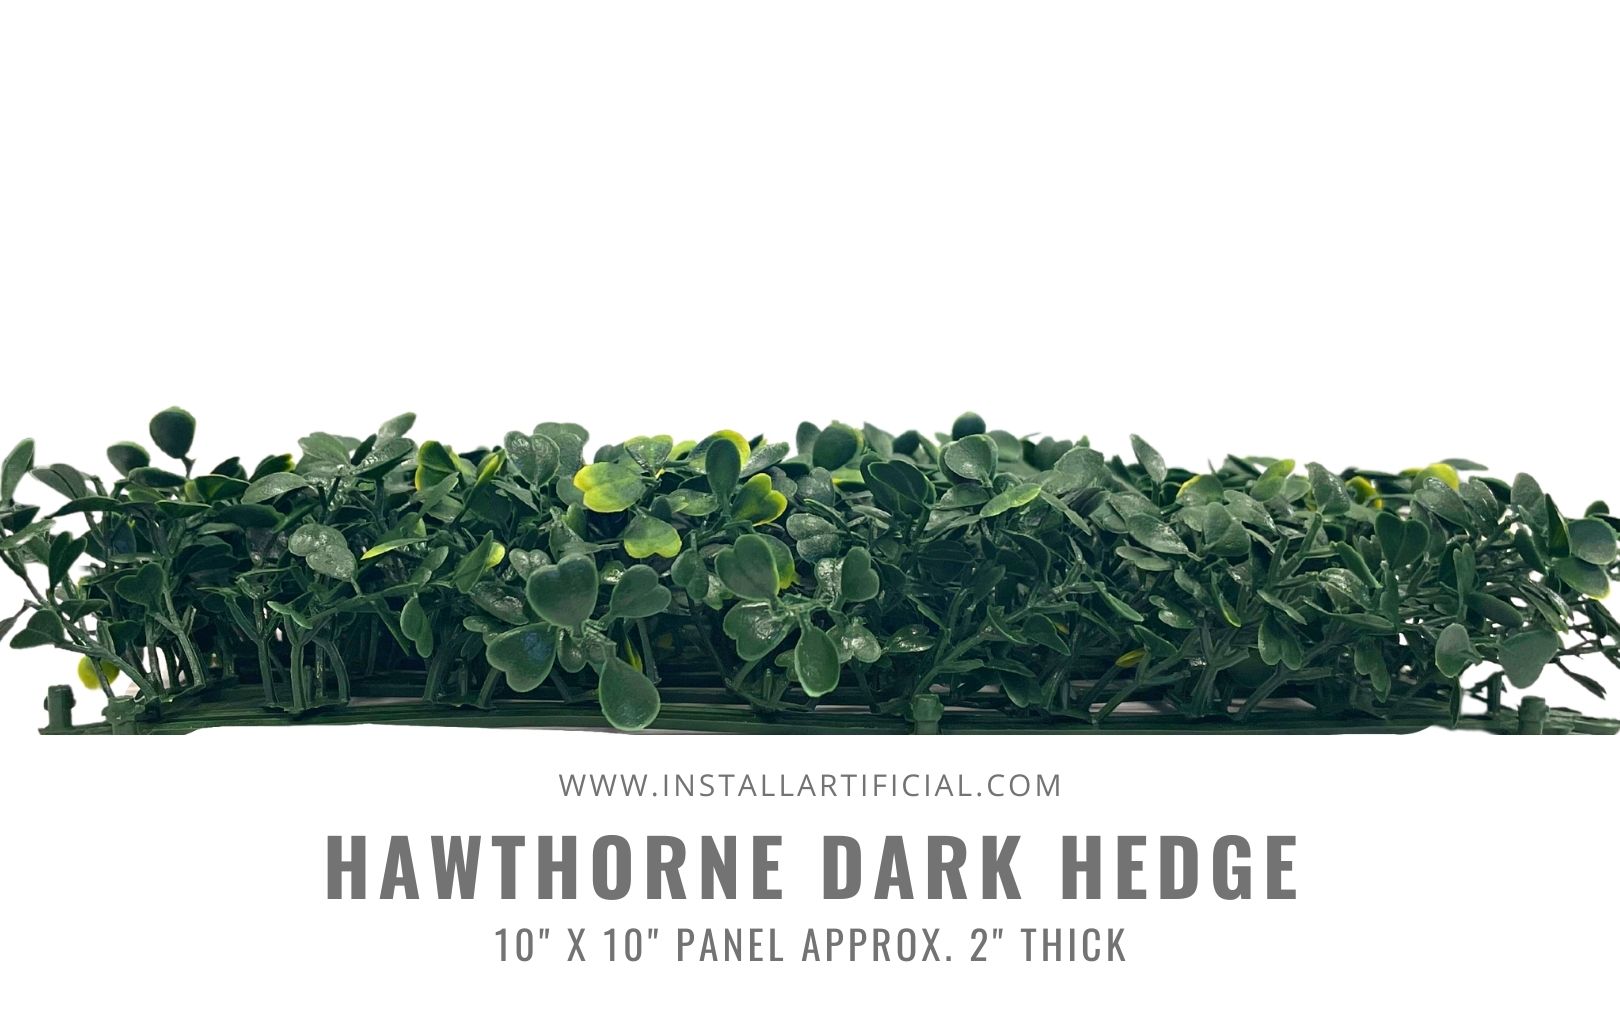 Hawthorne Dark Hedge Artificial Ivy side view